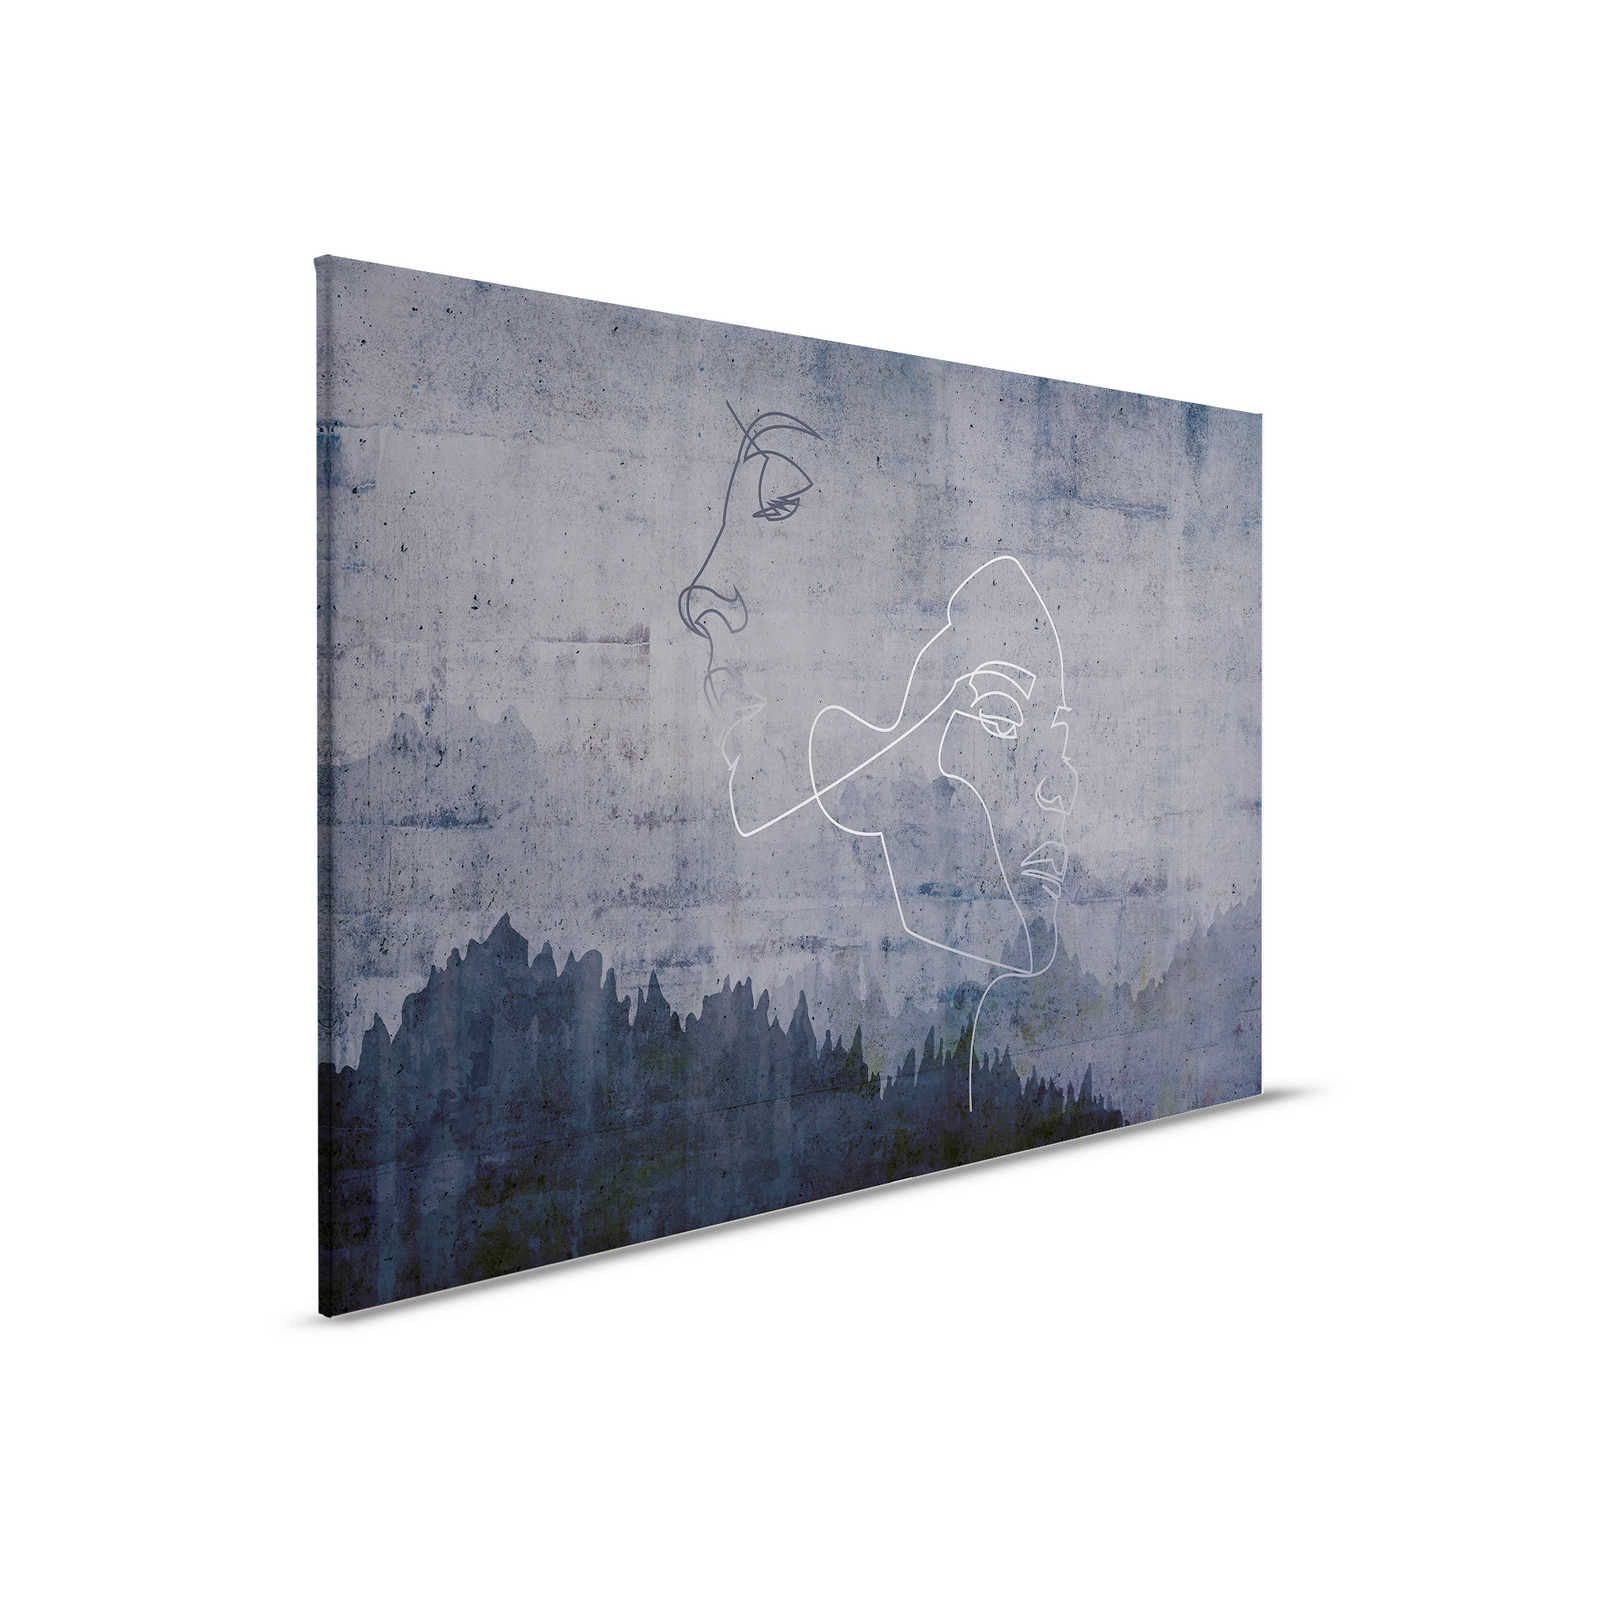         Canvas painting anthracite concrete look & silver line design - 0.90 m x 0.60 m
    